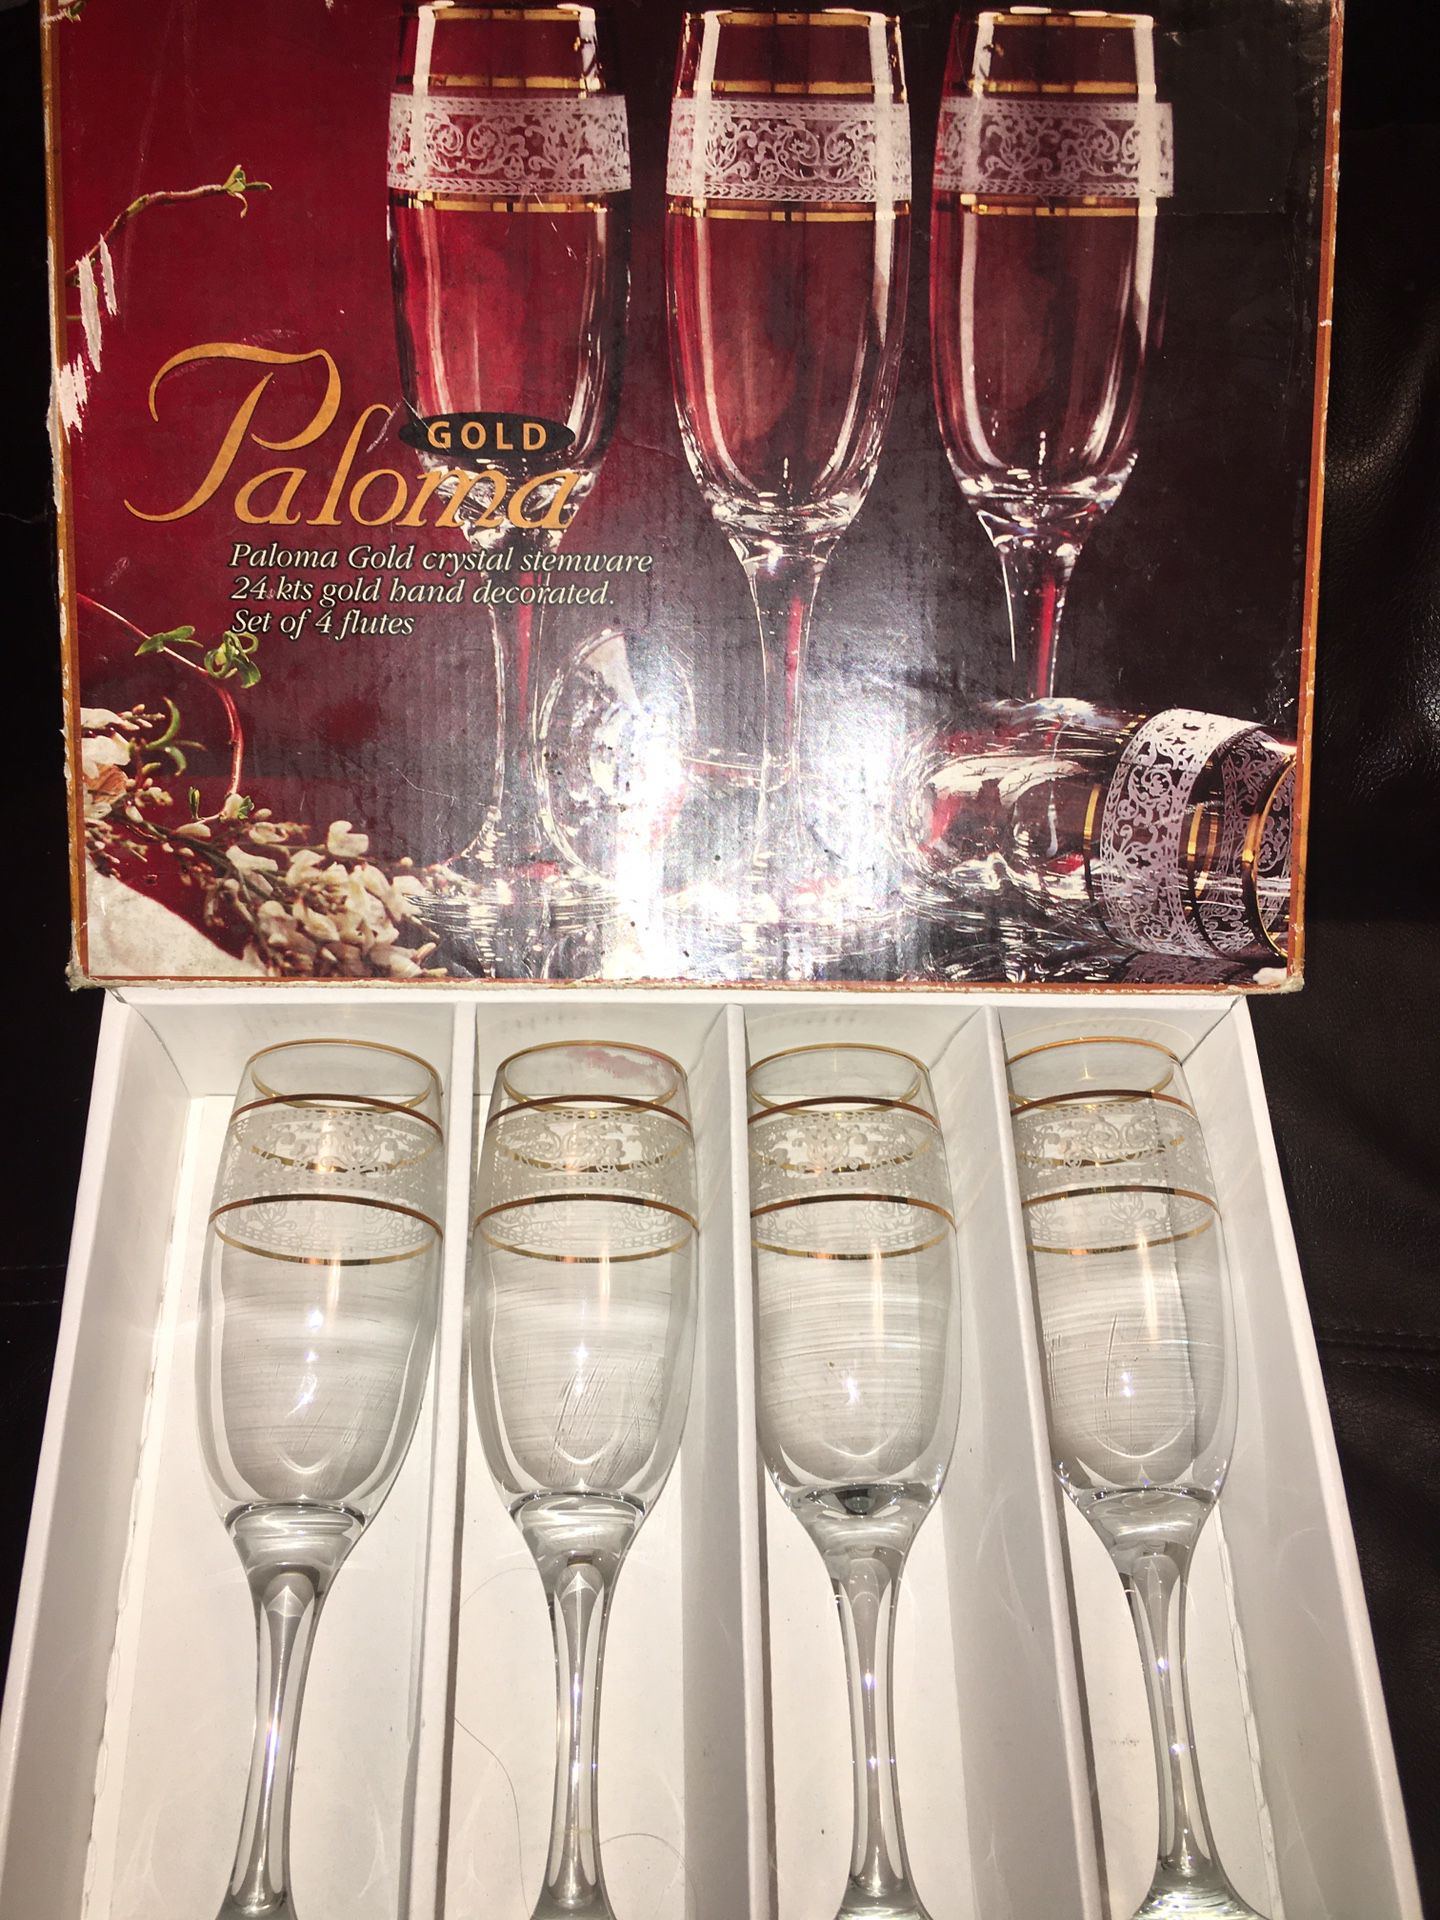 Paloma 24k gold crystal stemware